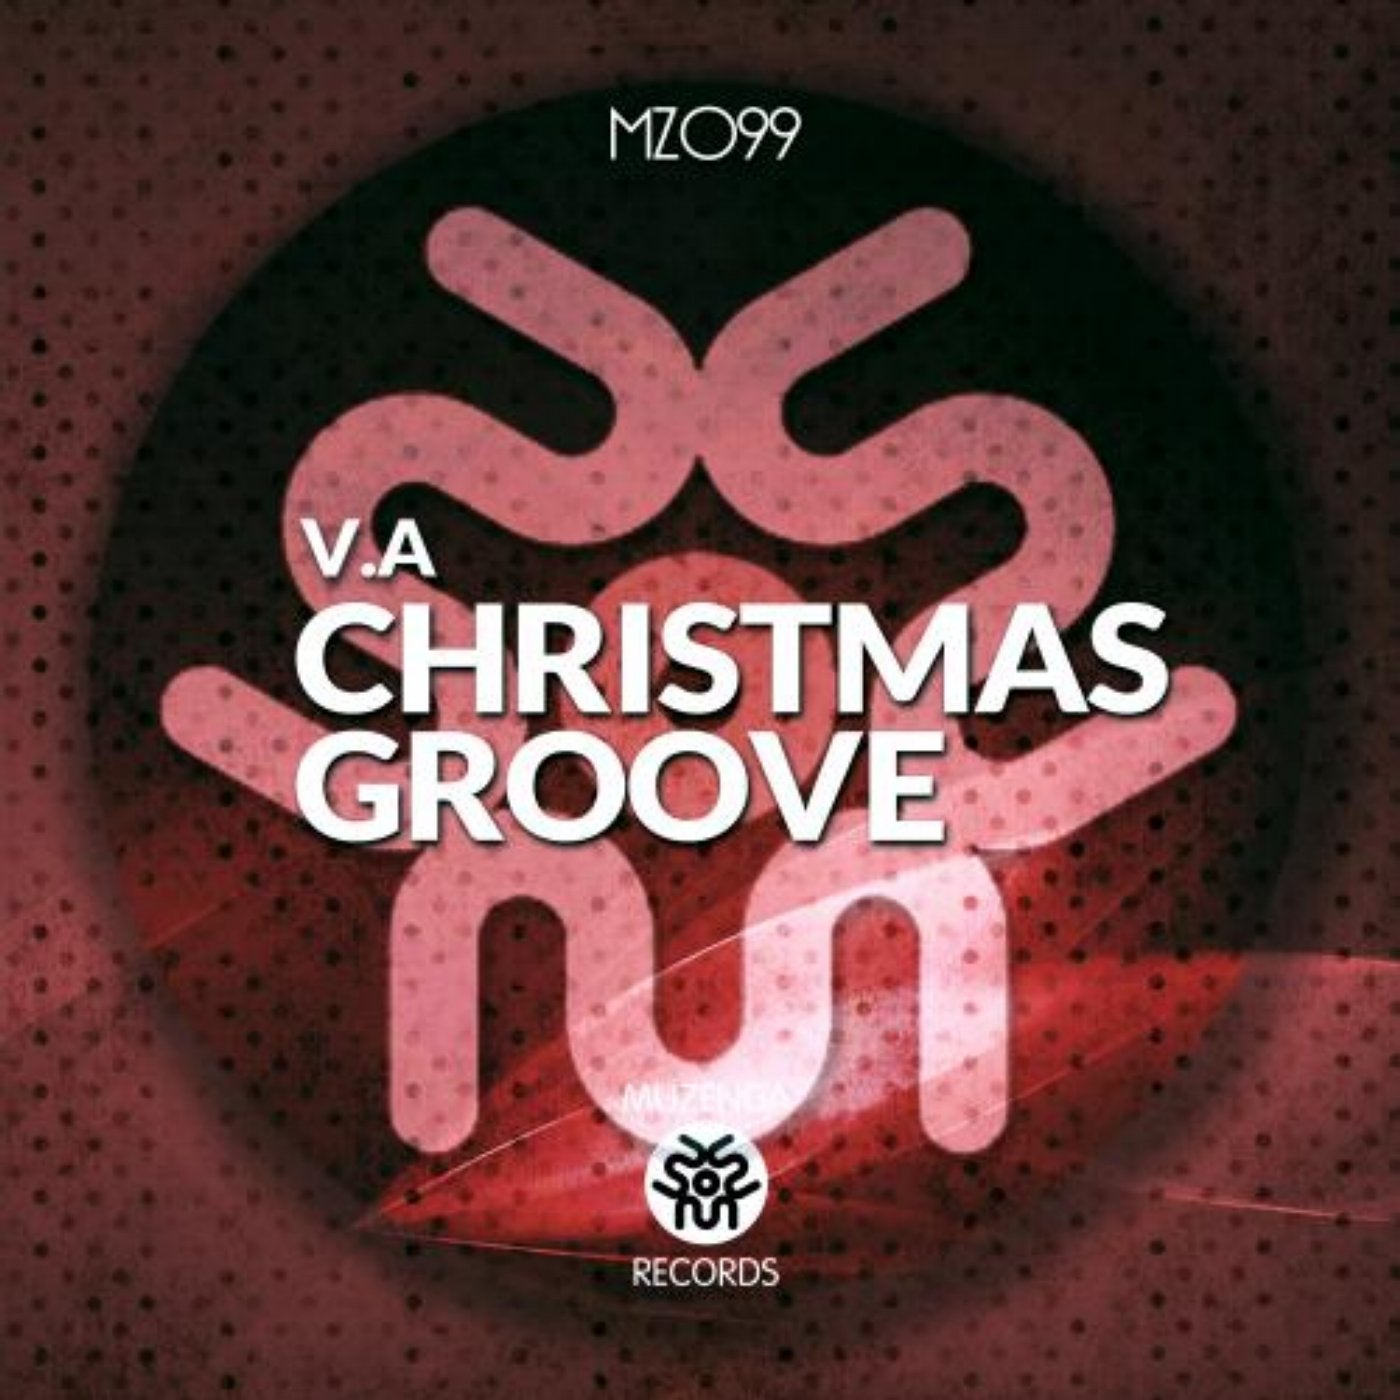 V.A Christmas Groove